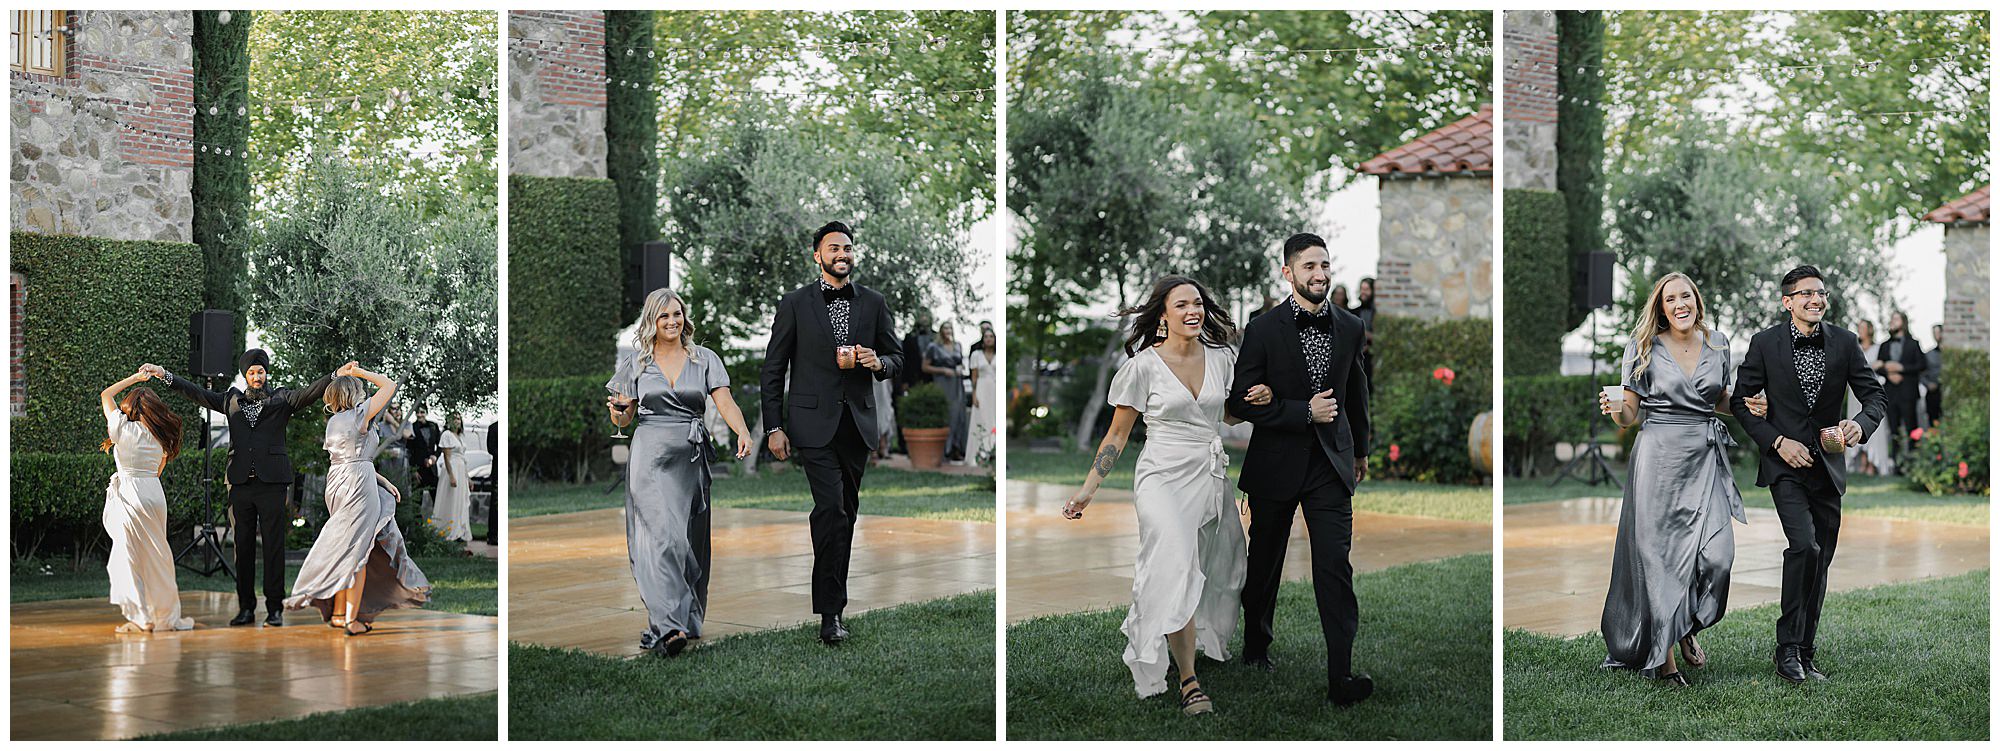 Cardella Winery Wedding Photos by Toni G Photo #tonigphoto_0068